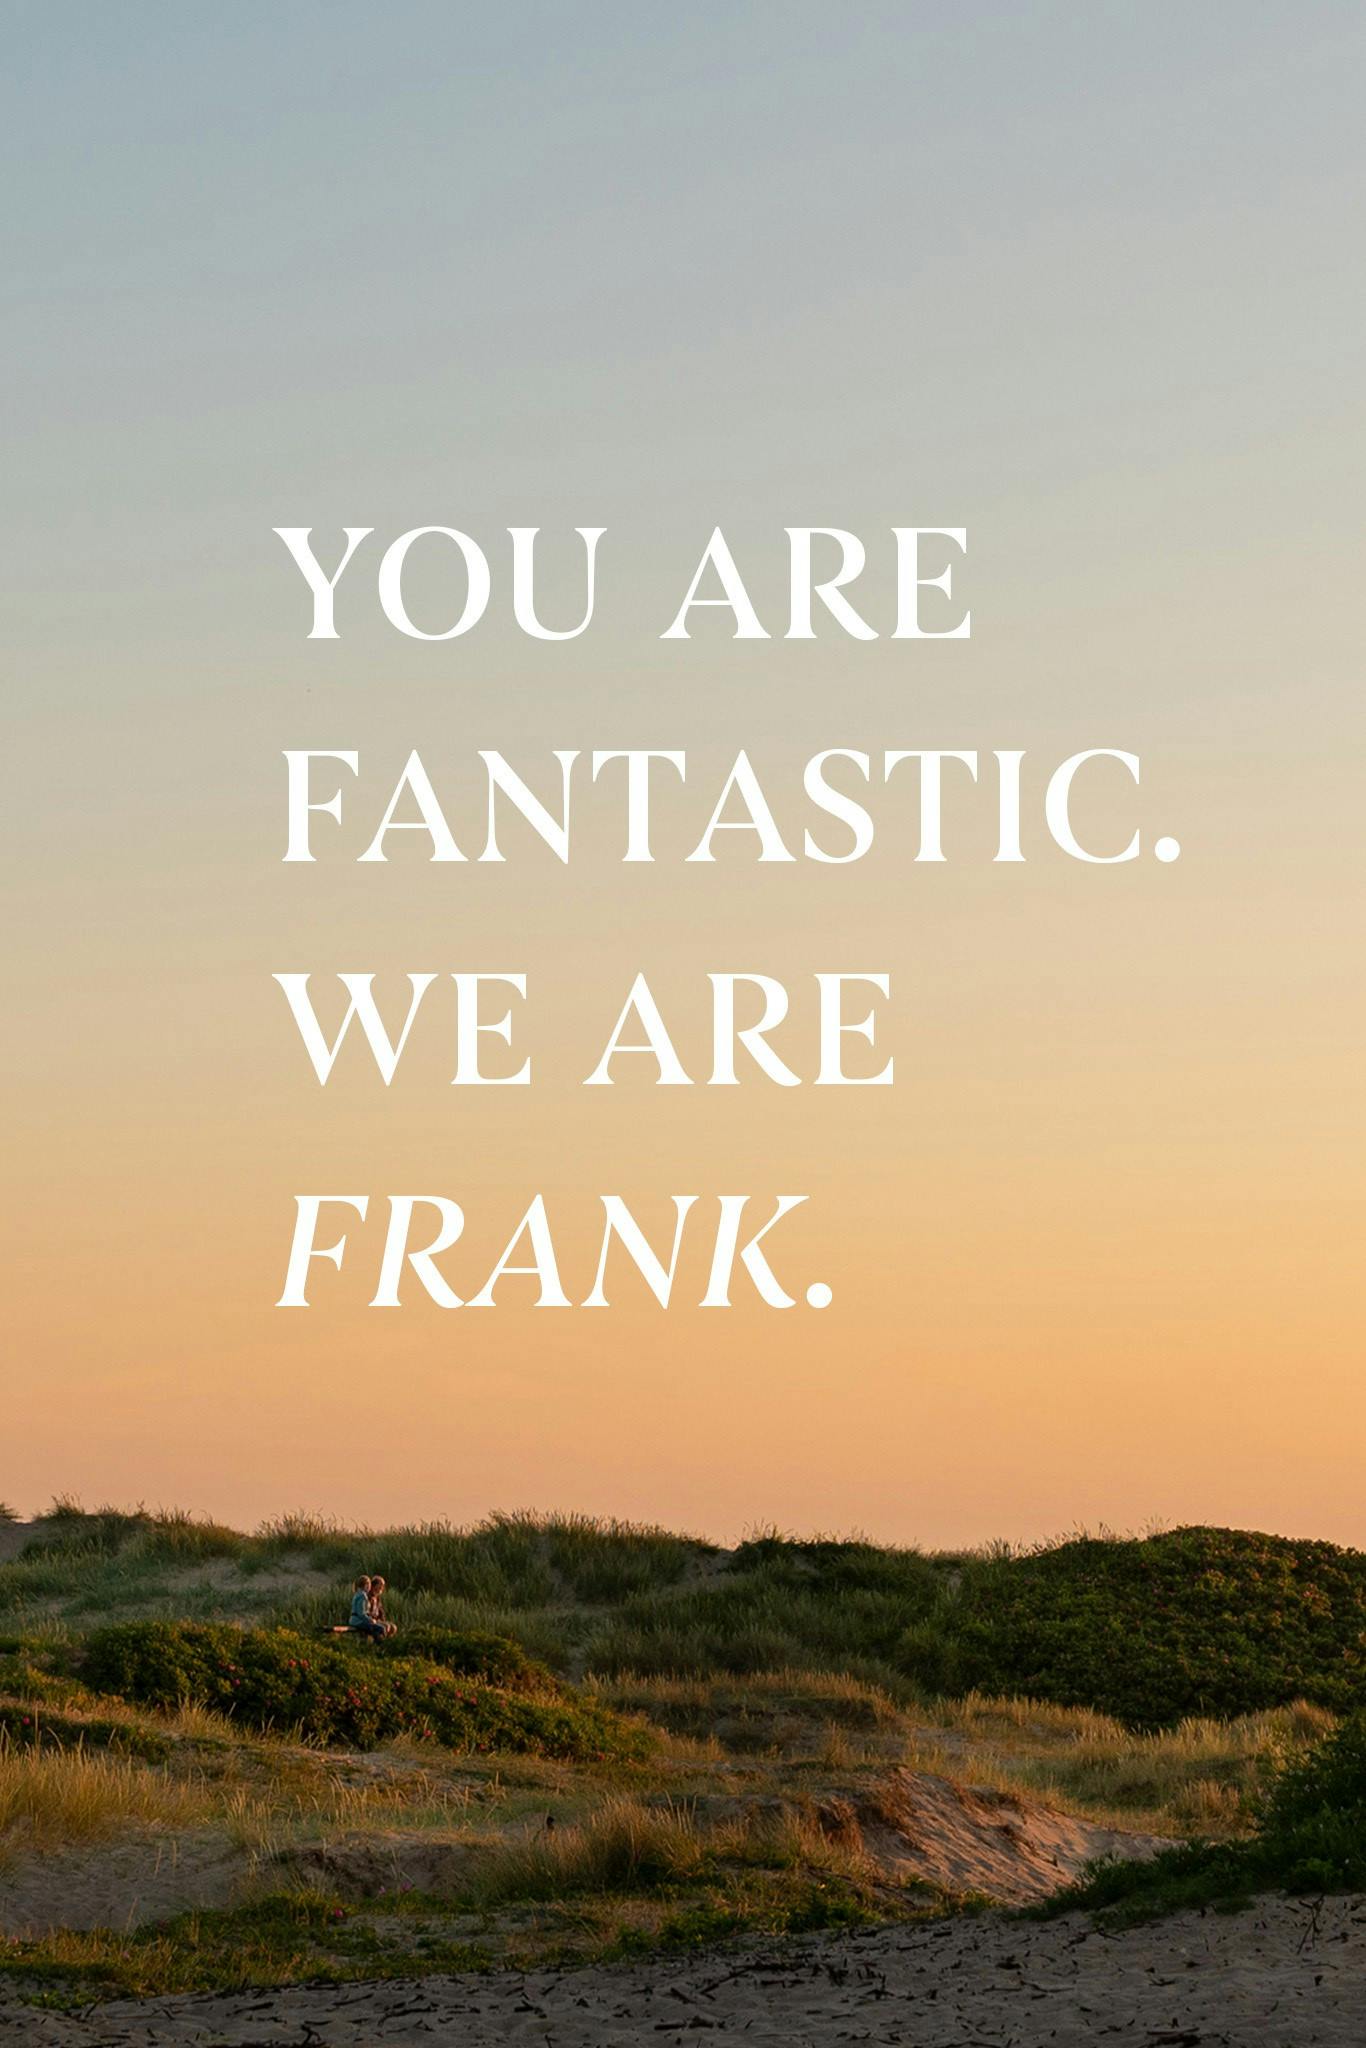 You are fantastic image